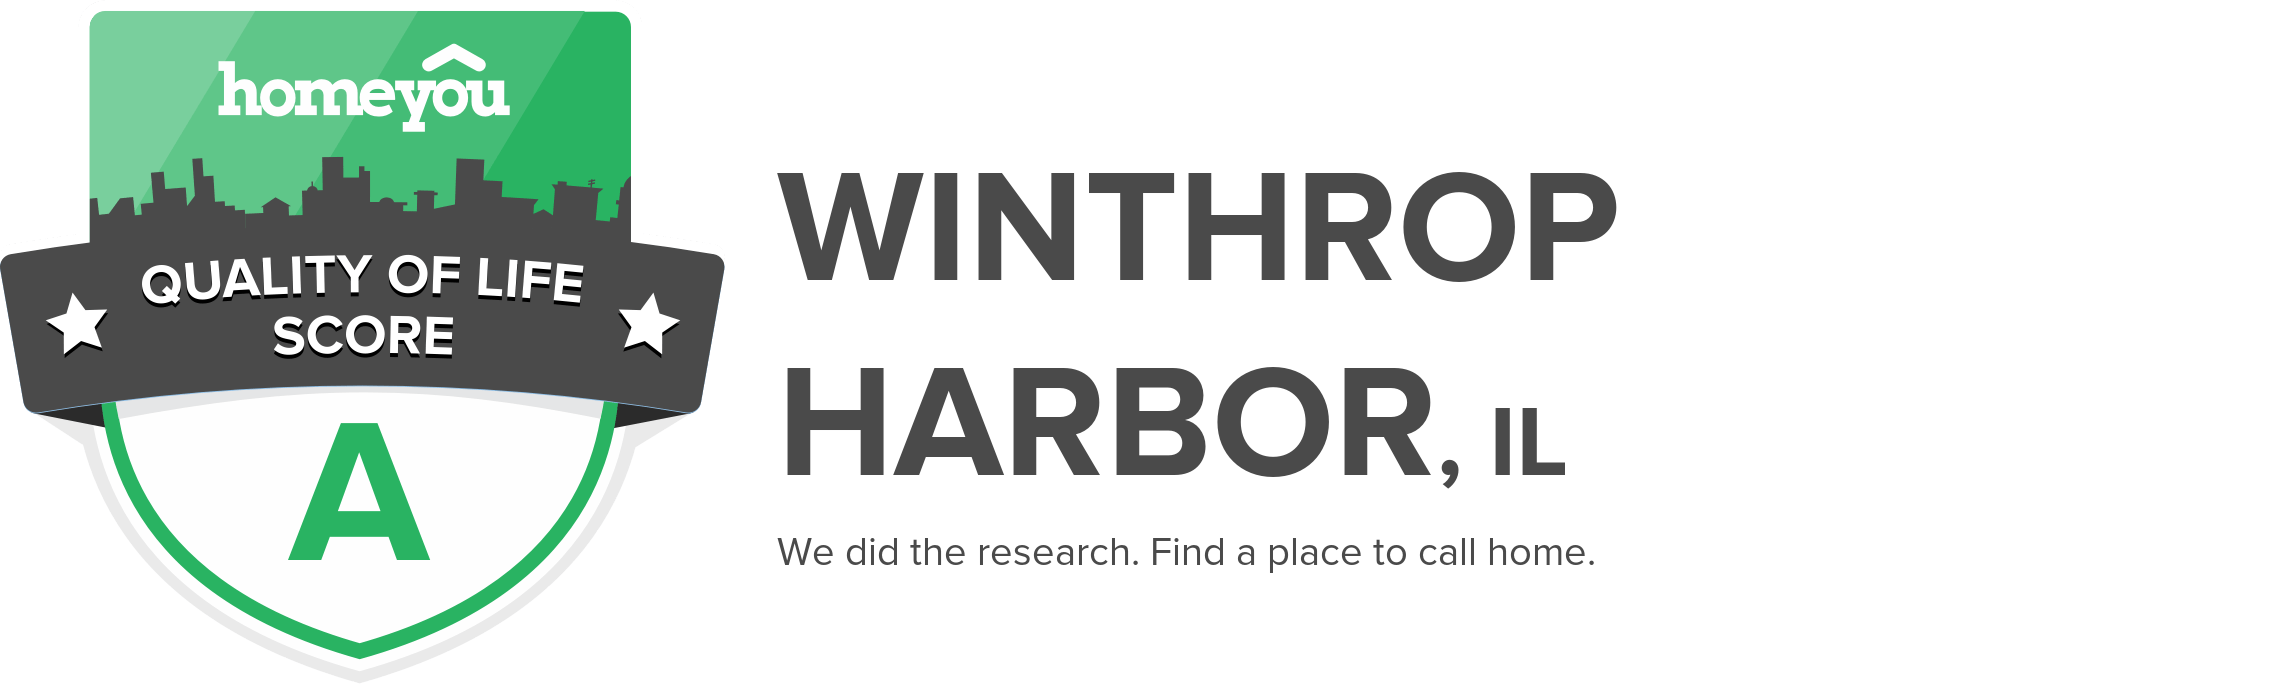 Winthrop Harbor, IL